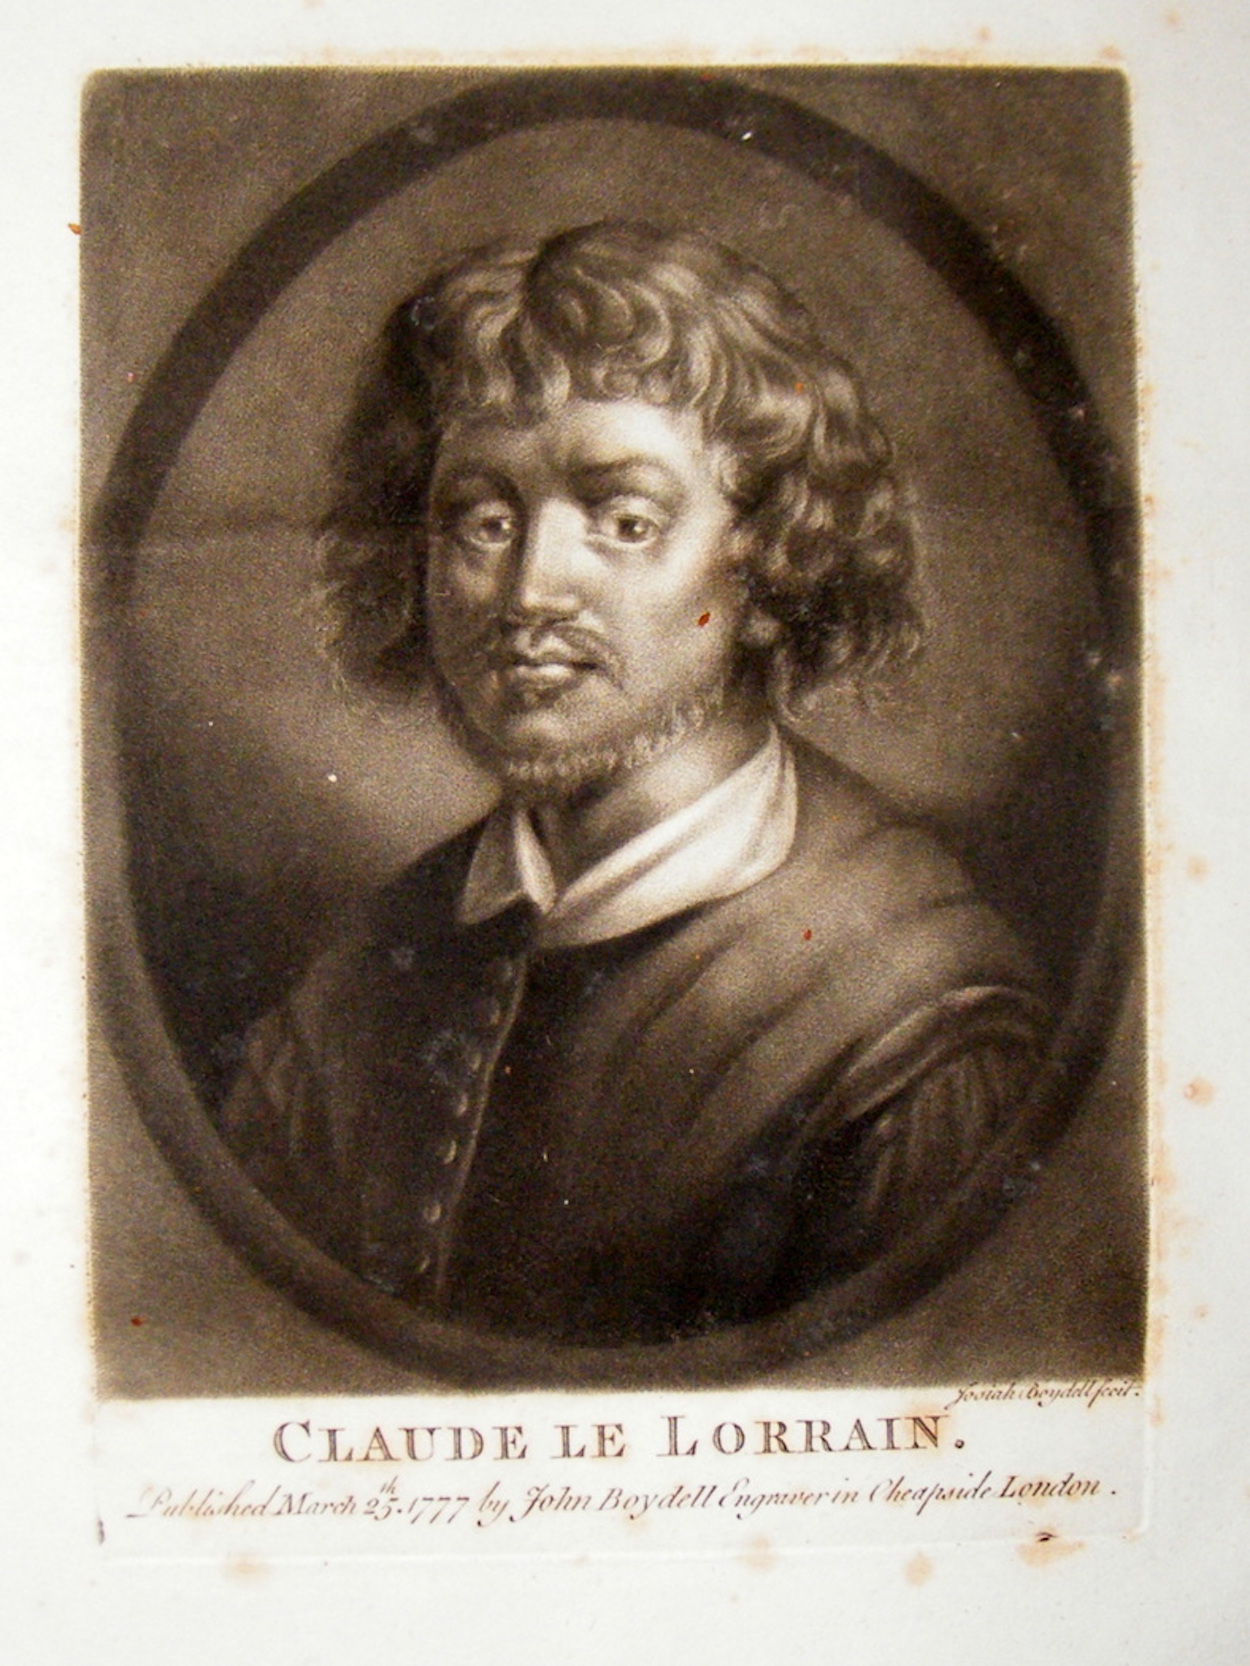 Claude Lorrain - c. 1600 - 23 novembre 1682